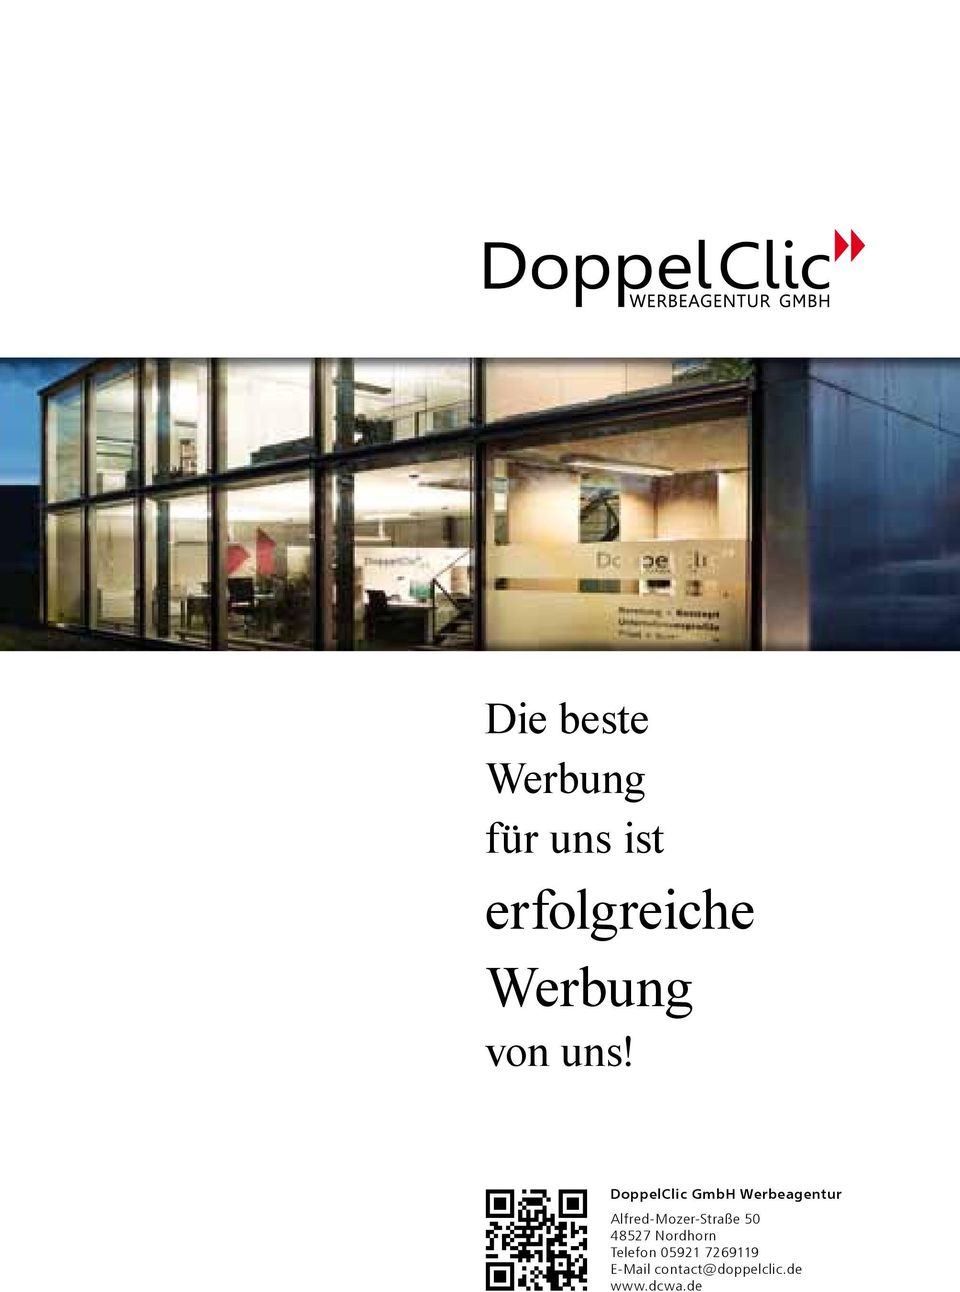 DoppelClic GmbH Werbeagentur